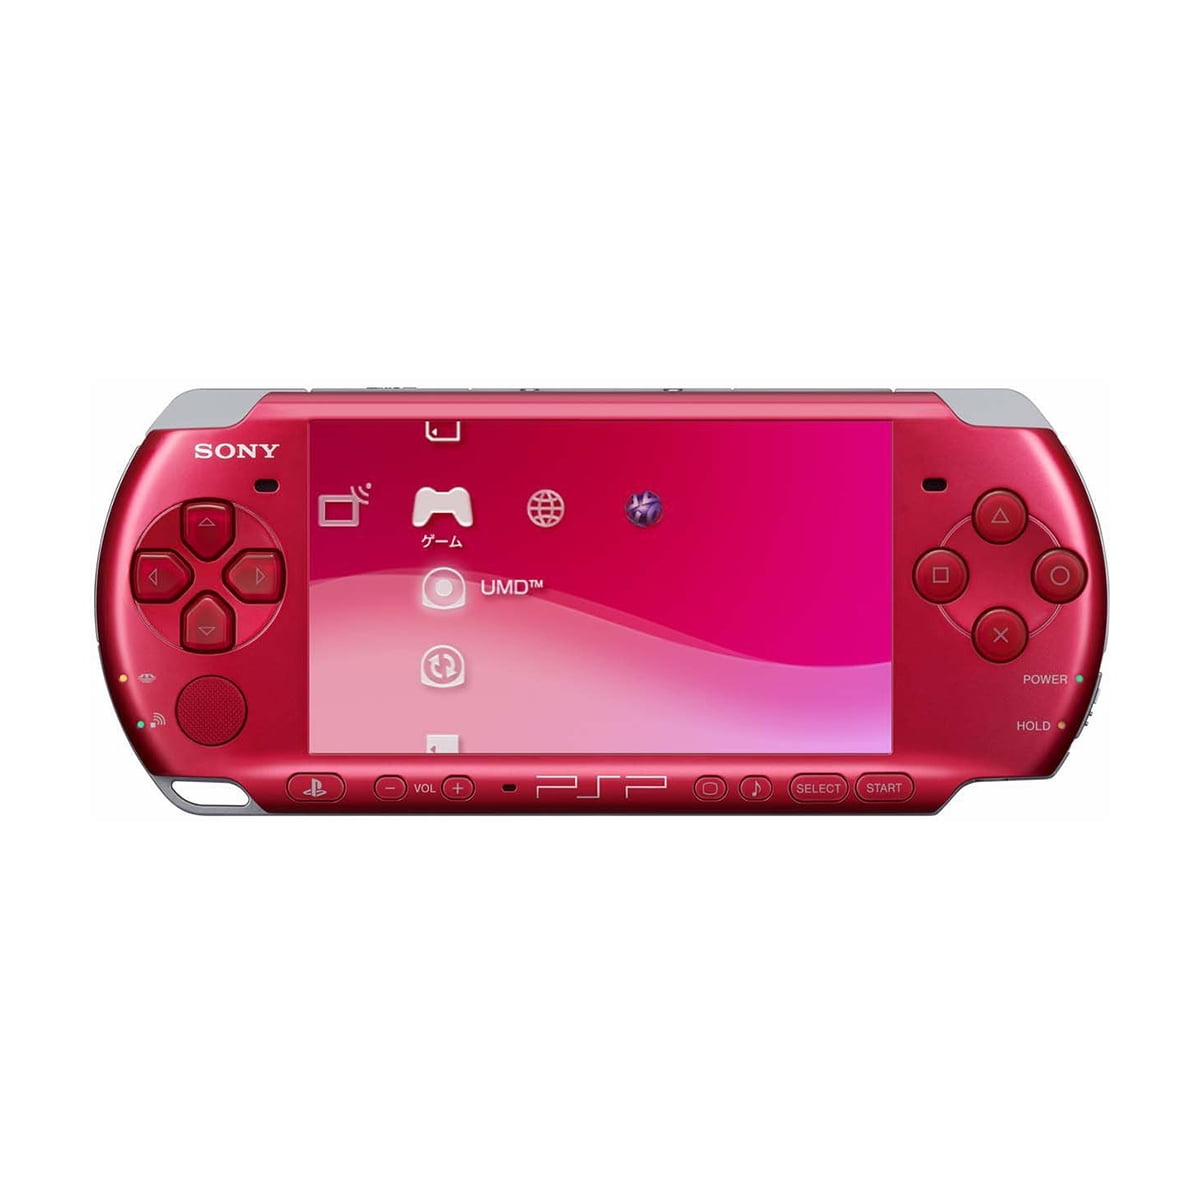  Sony Playstation Portable PSP 3000 Series Handheld